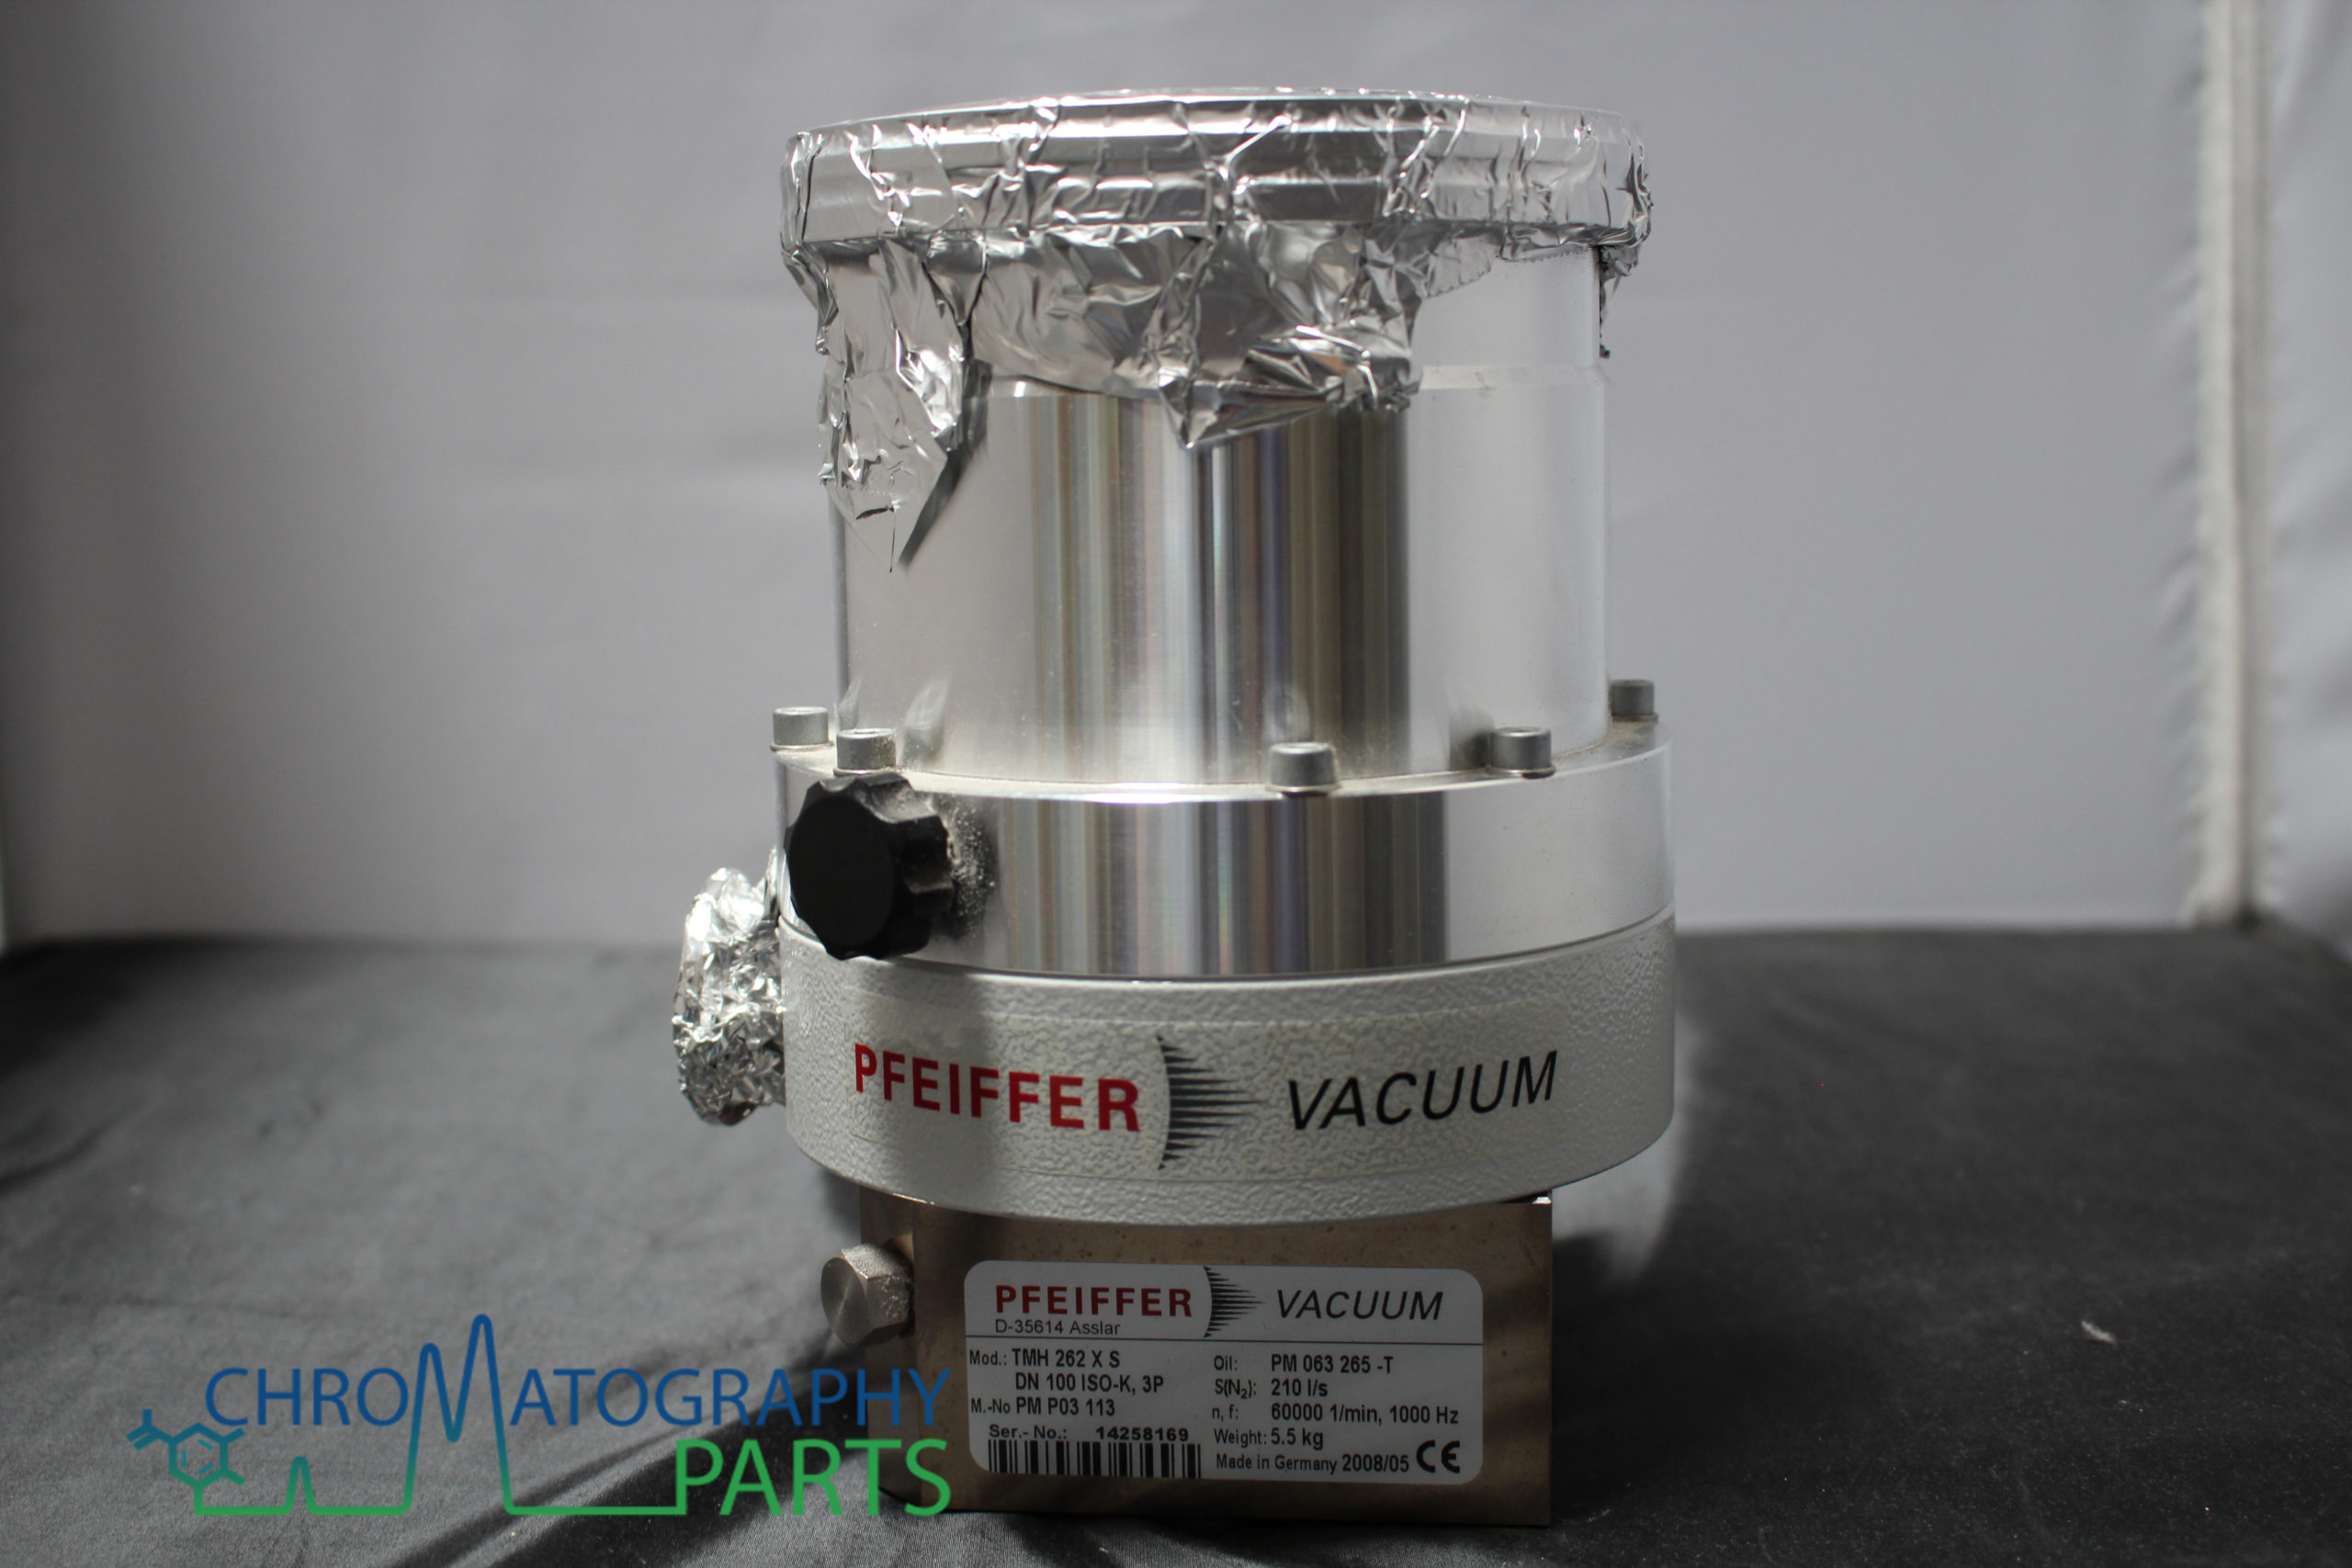 Pfeiffer Vacuum D Asslar Turbo Pump G3170 Chromatography Parts